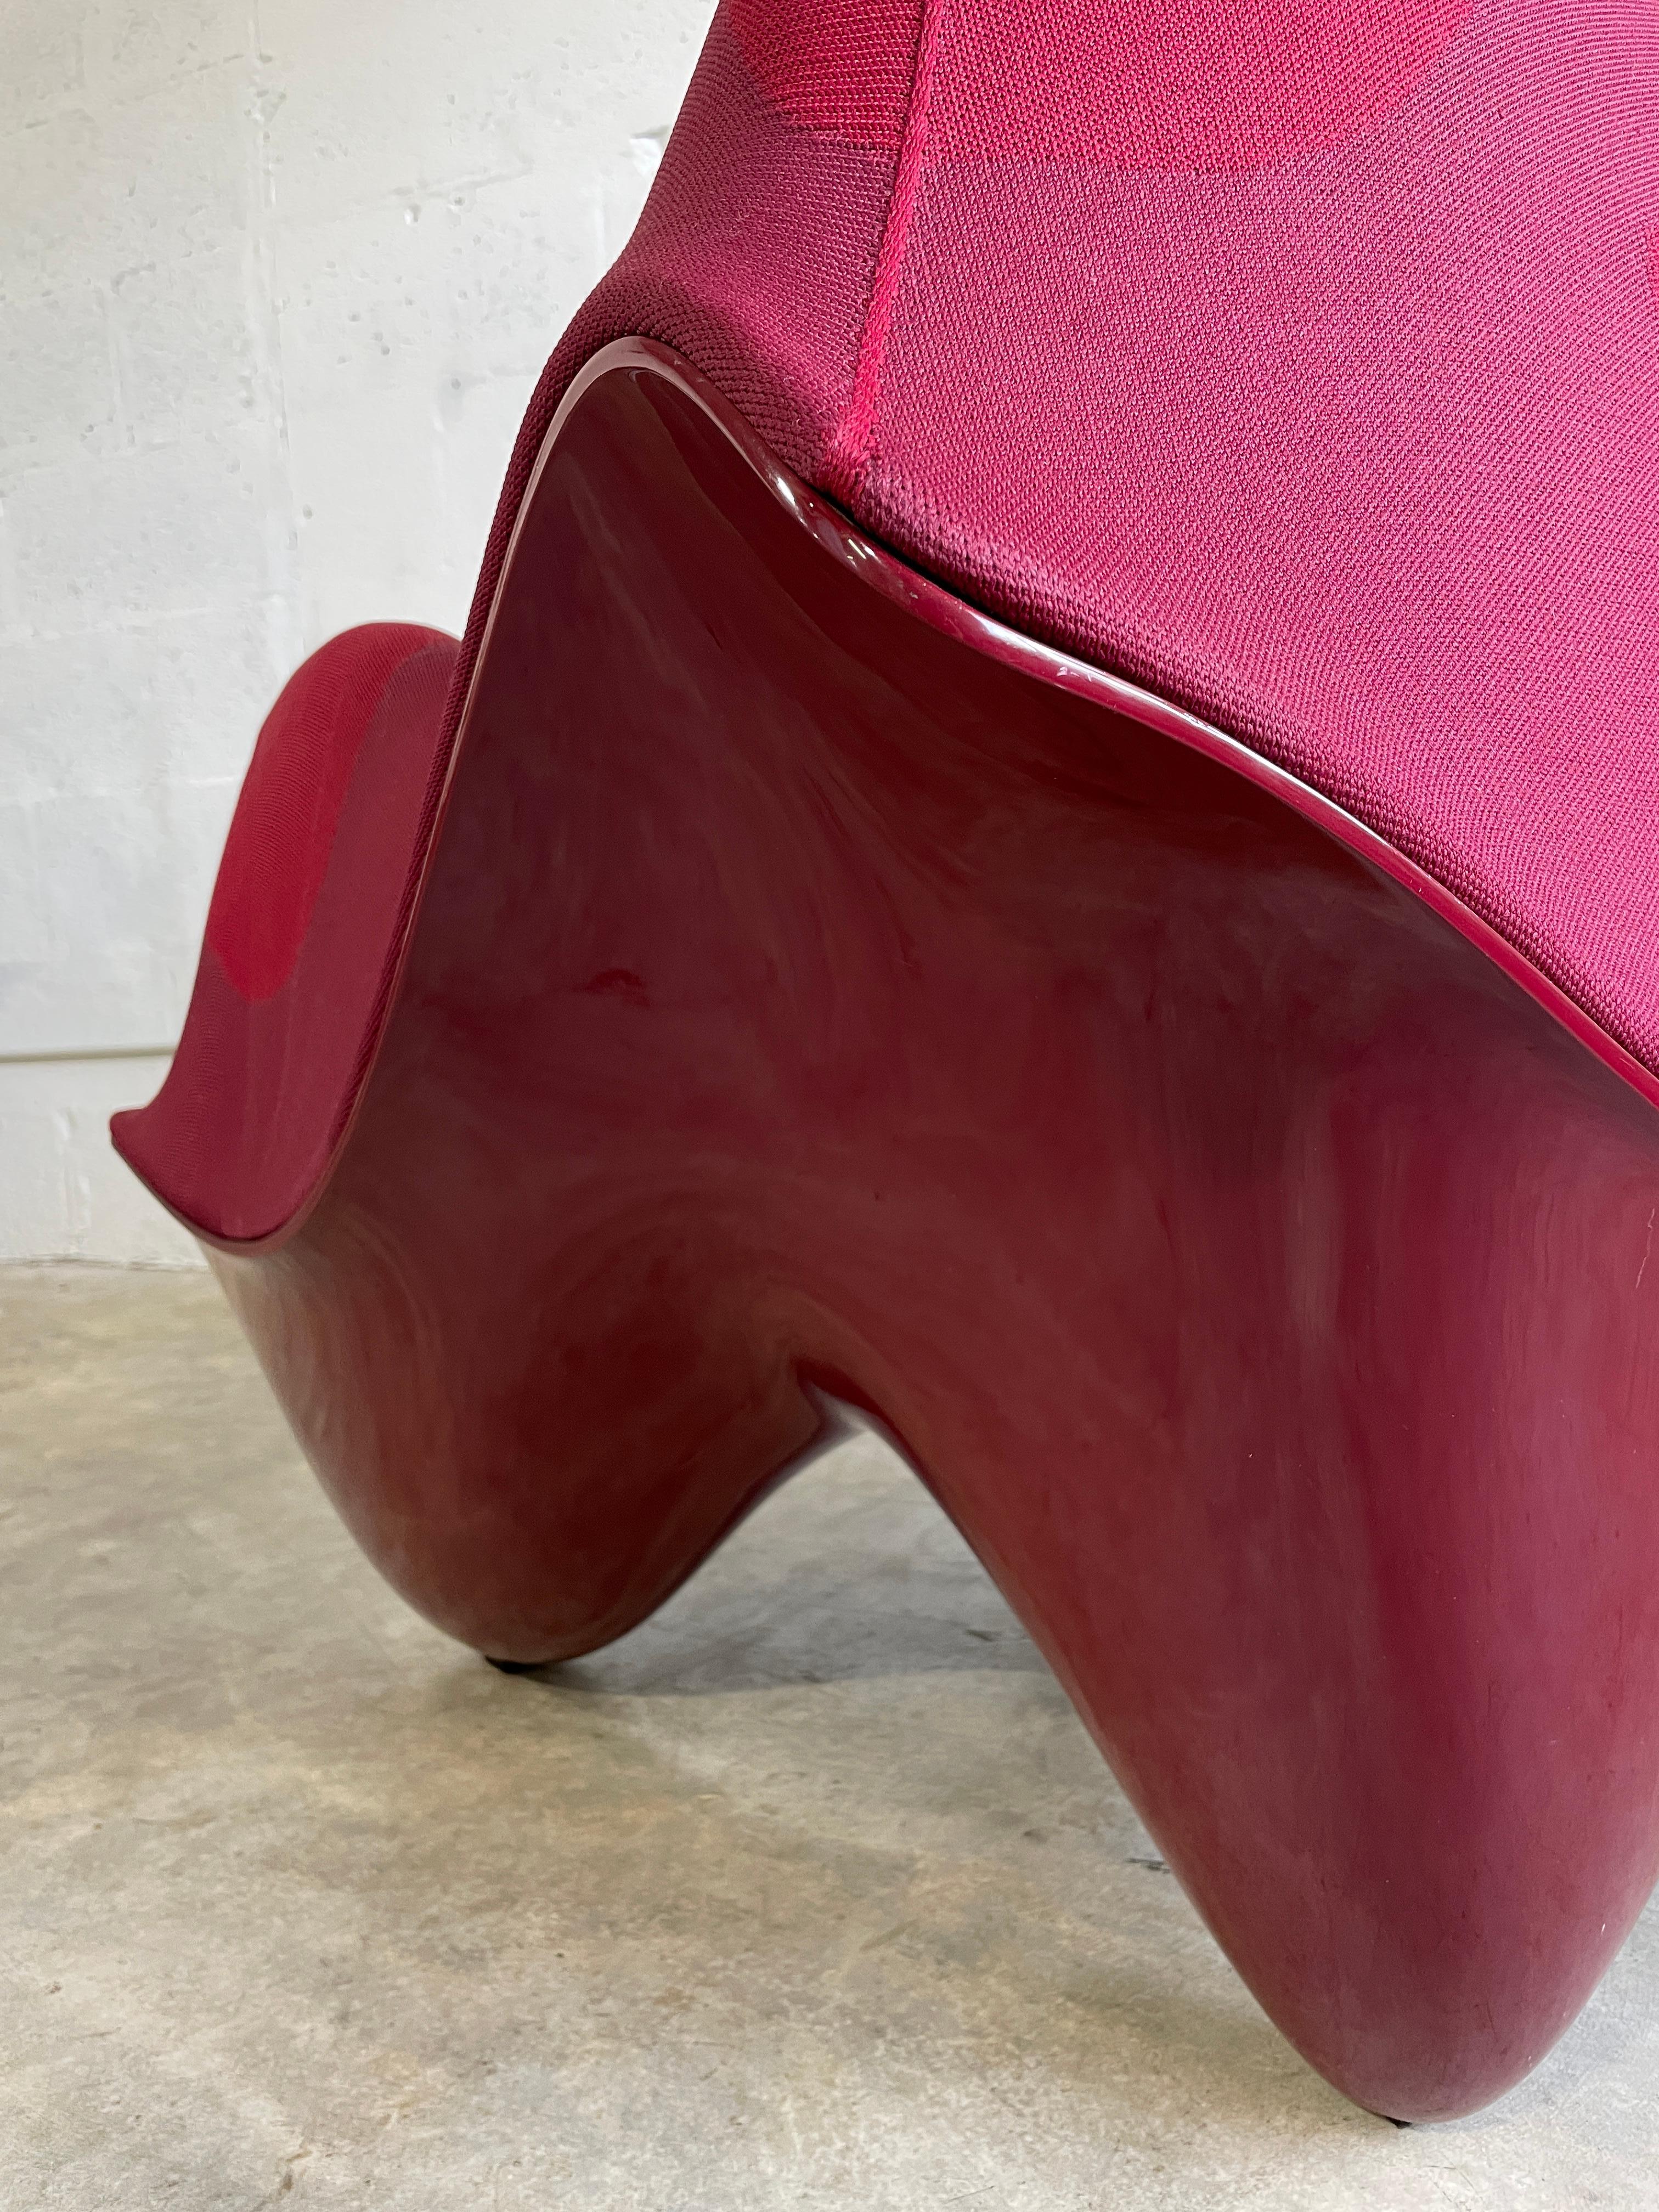 Contemporary Greg Lynn “Ravioli” Chair by Vitra For Sale